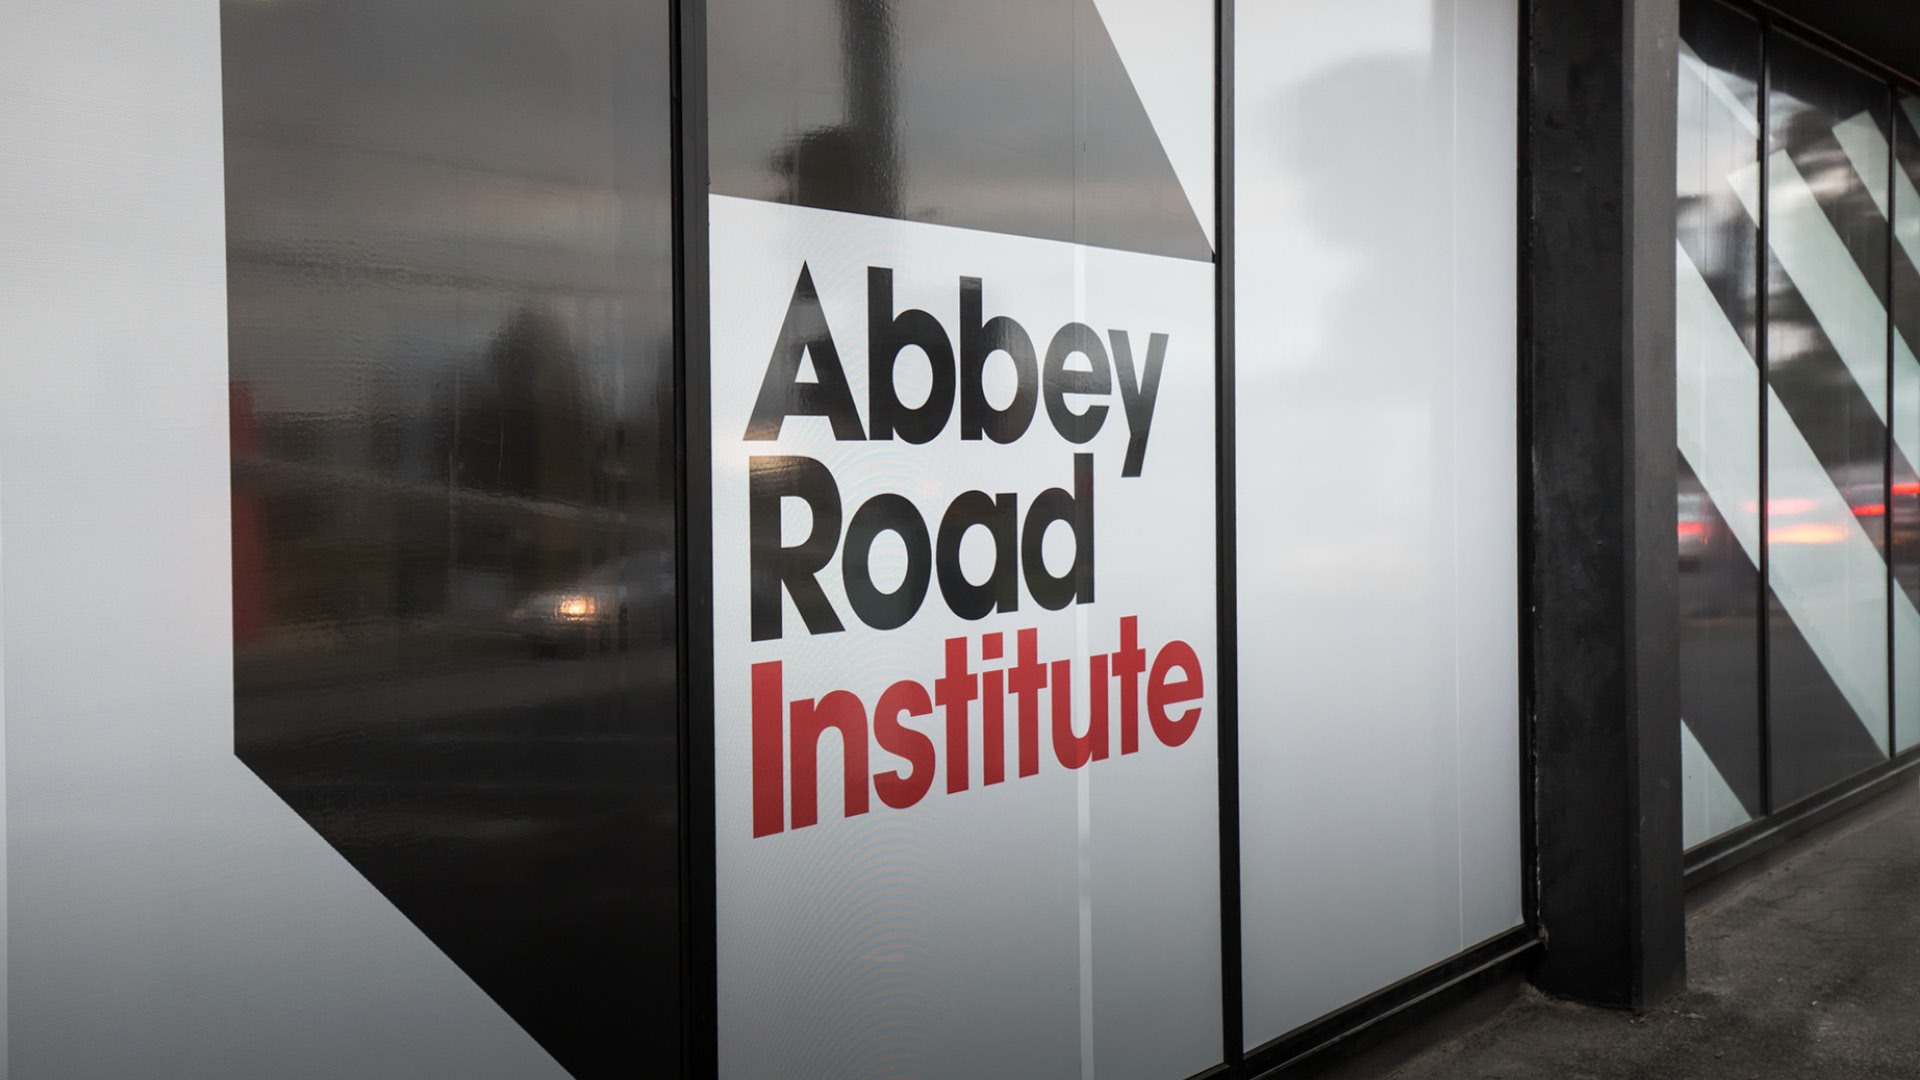 Abbey Road Institute2.jpg